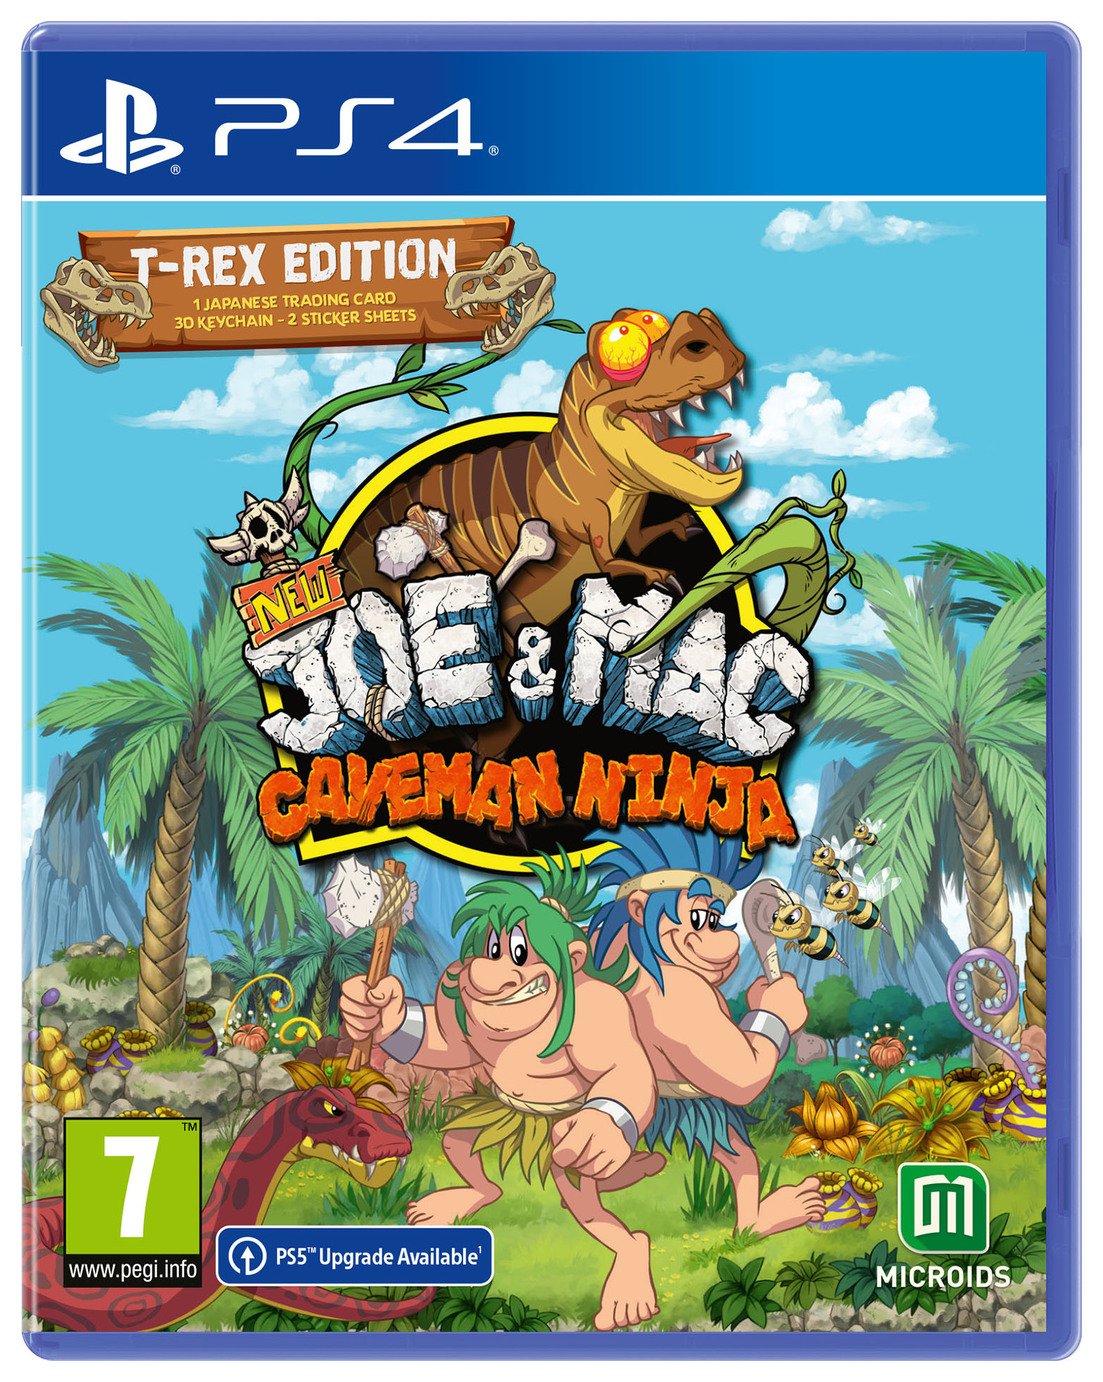 New Joe & Mac Caveman Ninja T-Rex Edition PS4 Game